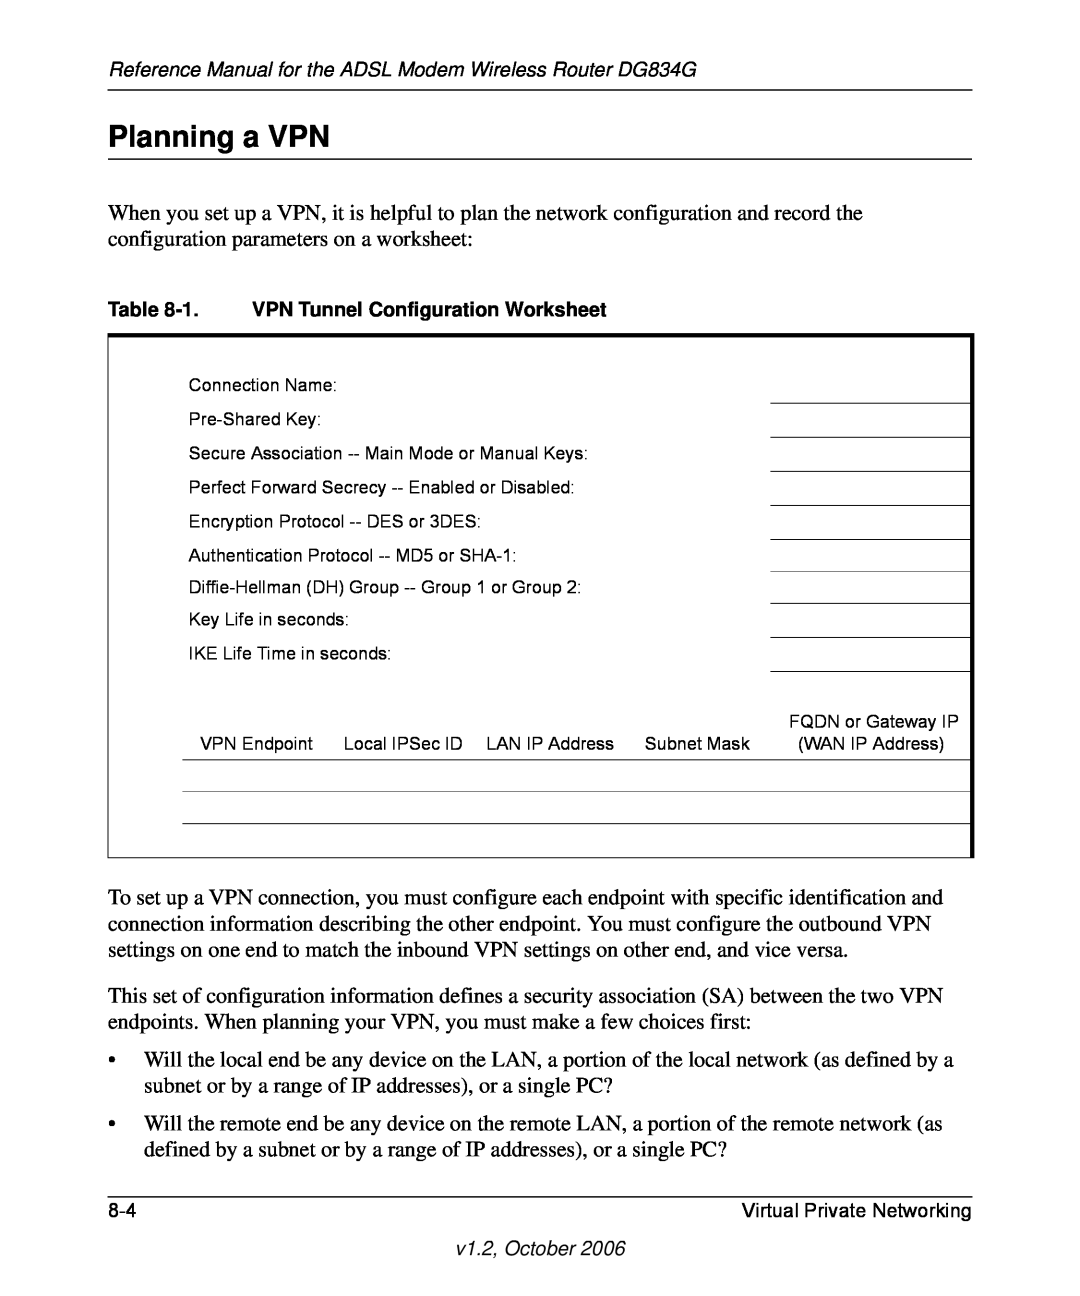 NETGEAR DG834G manual Planning a VPN, 1. VPN Tunnel Configuration Worksheet 